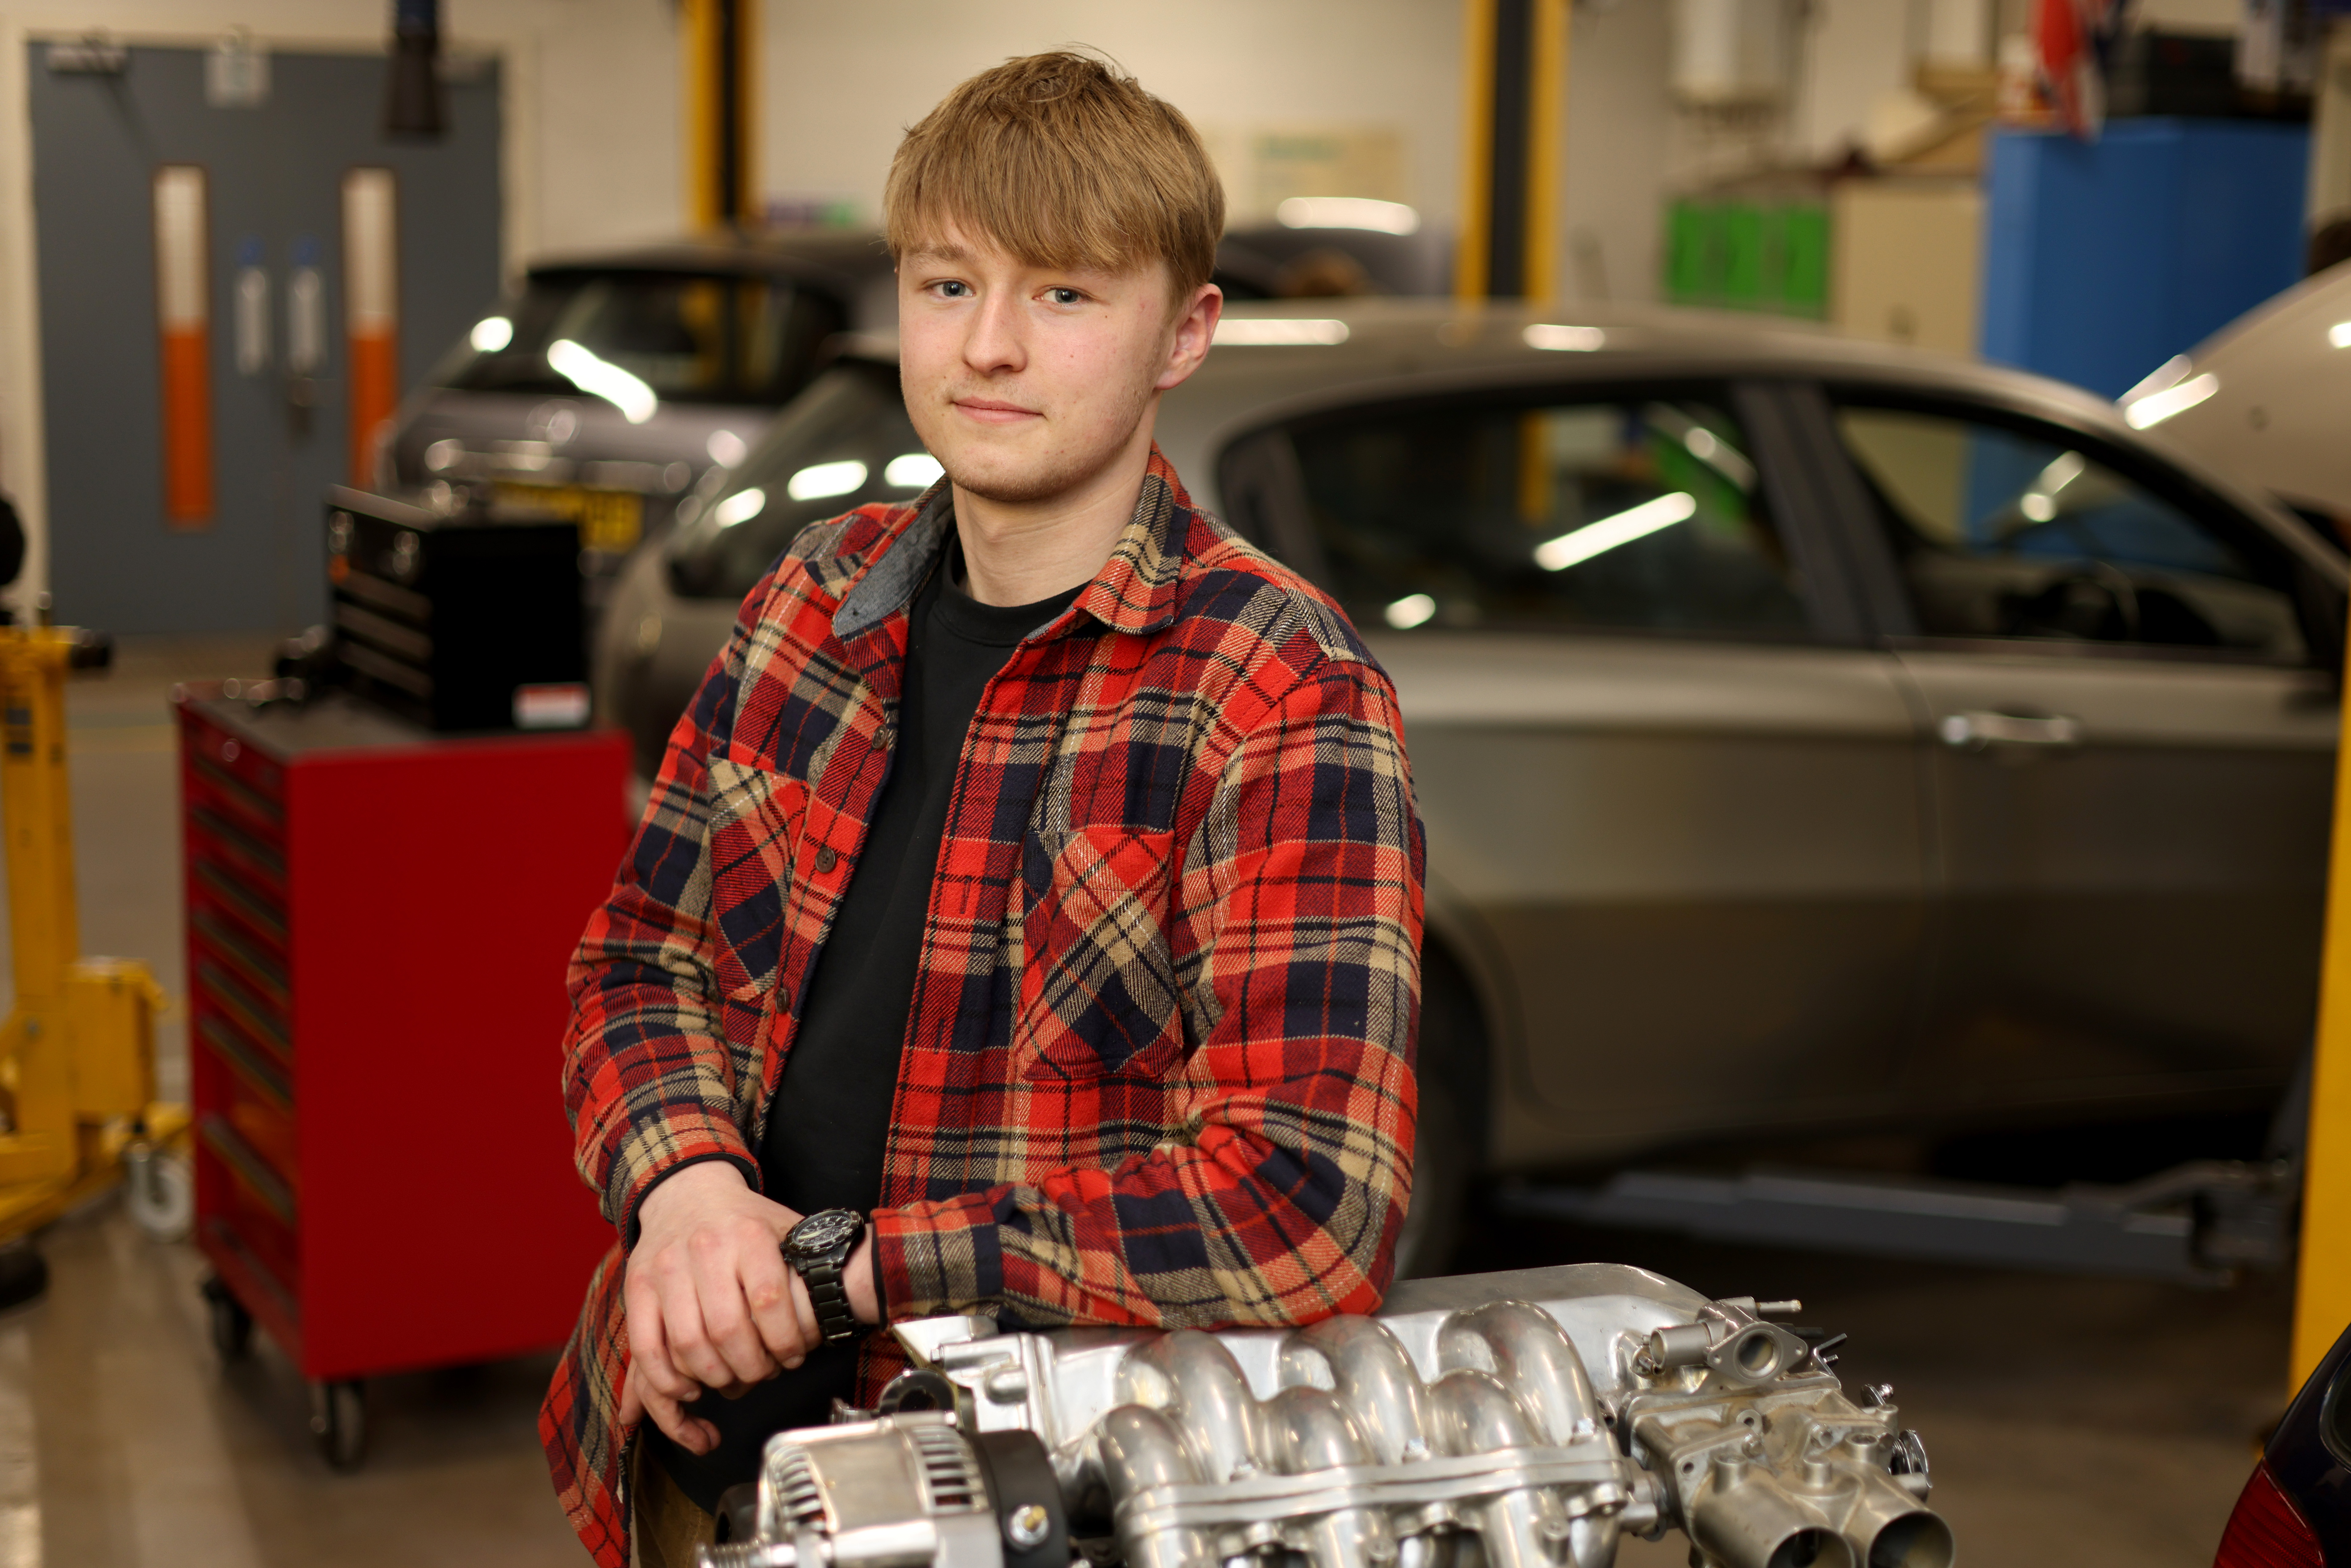 Meet Inigo, Motor Vehicle Service and Maintenance Technician Apprentice at Motor Morgan Company